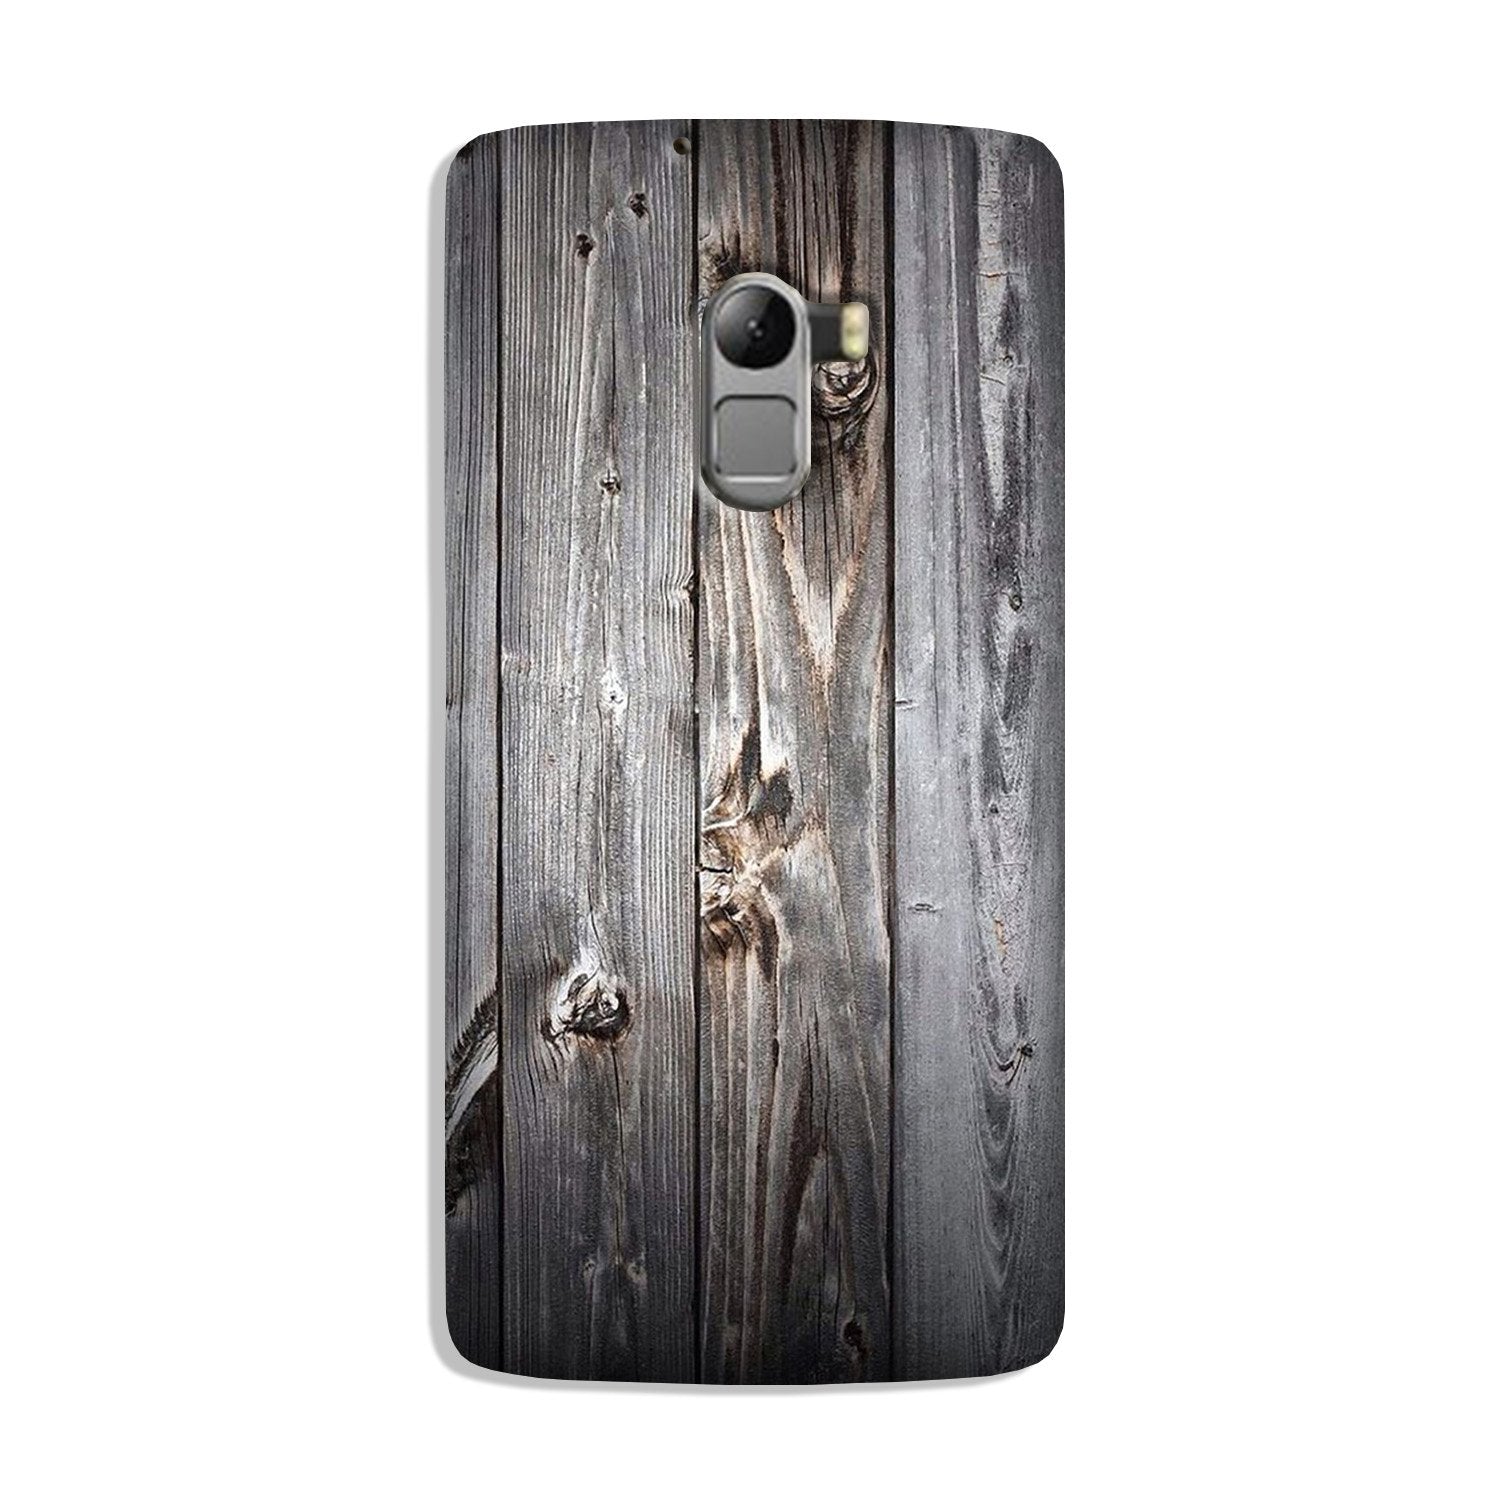 Wooden Look Case for Lenovo K4 Note  (Design - 114)